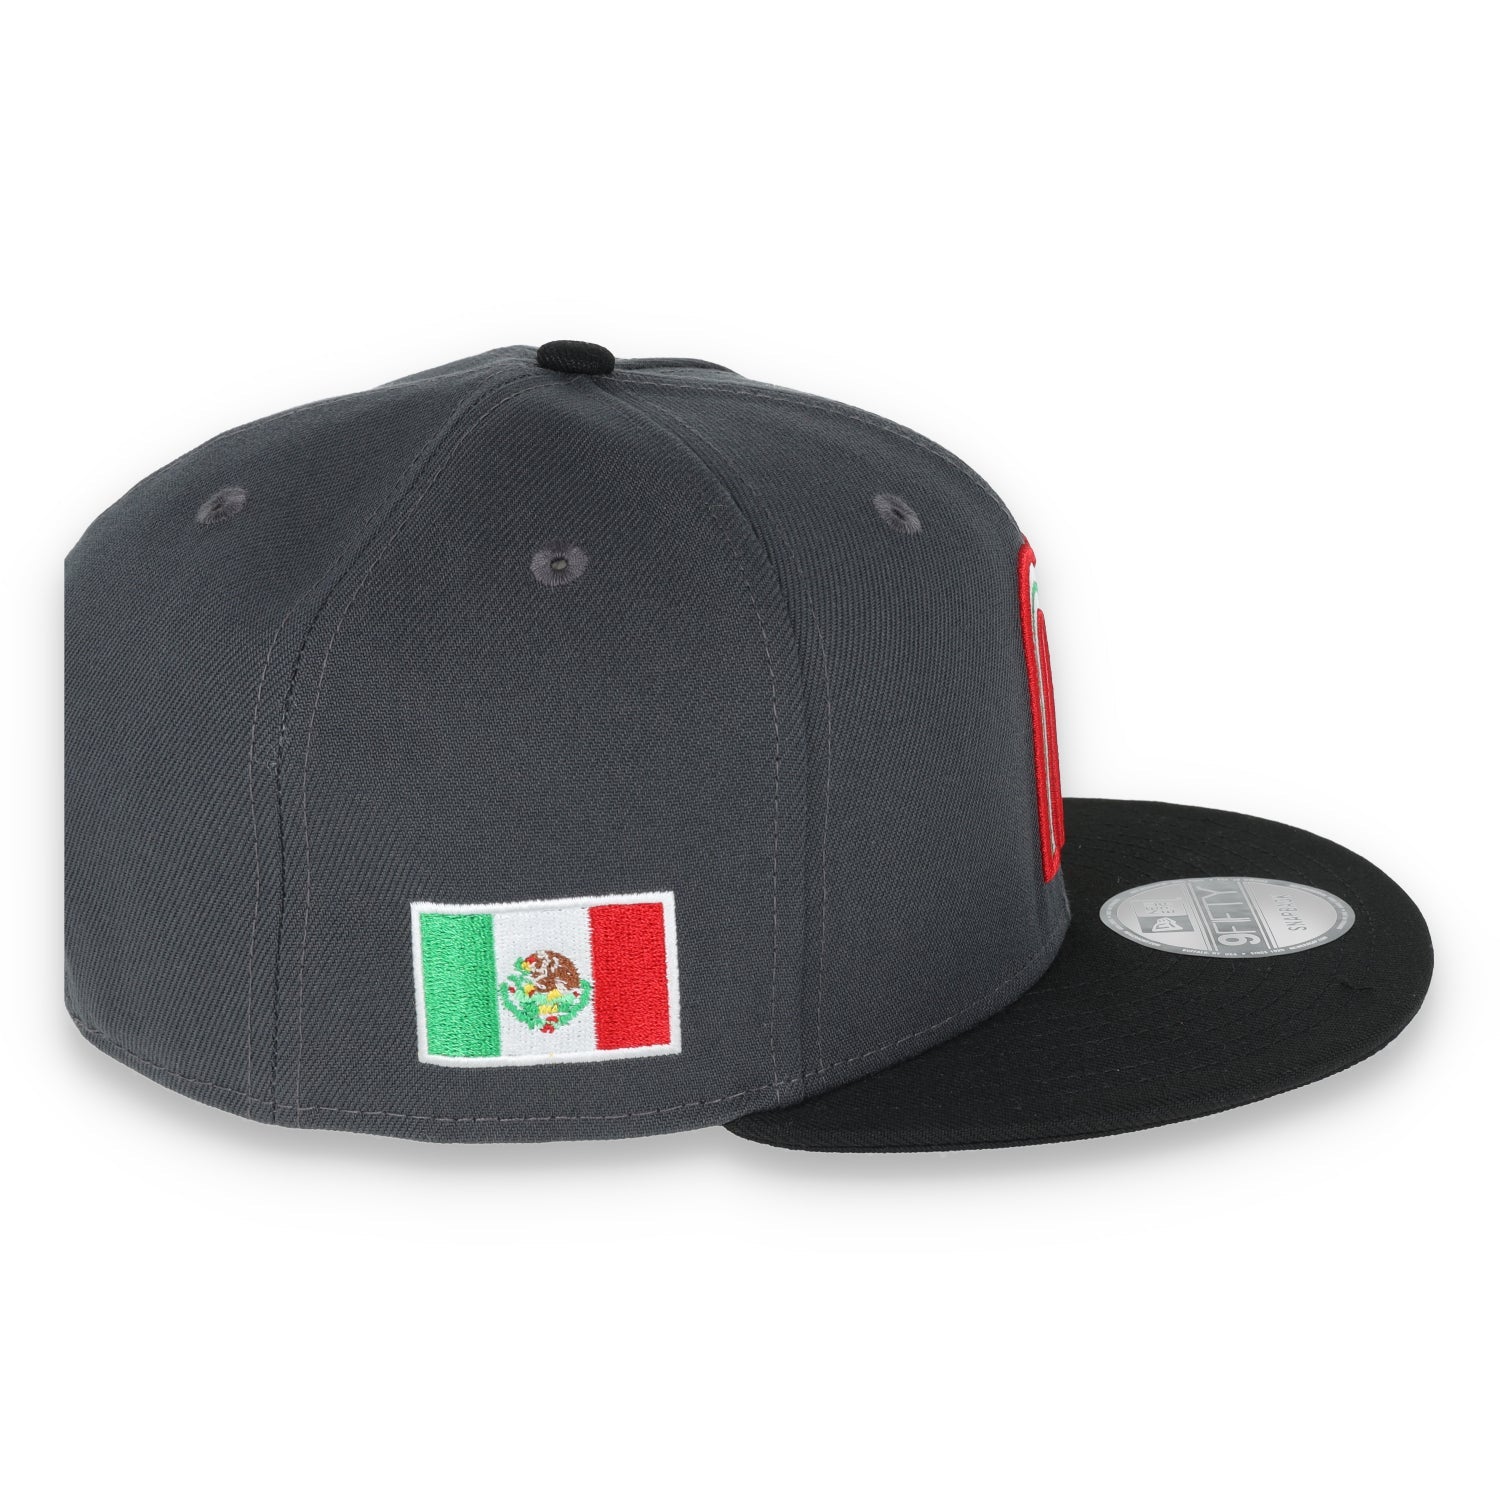 NEW ERA OFFICIAL MEXICO 9FIFTY SNAPBACK HAT-GRAY/BLACK